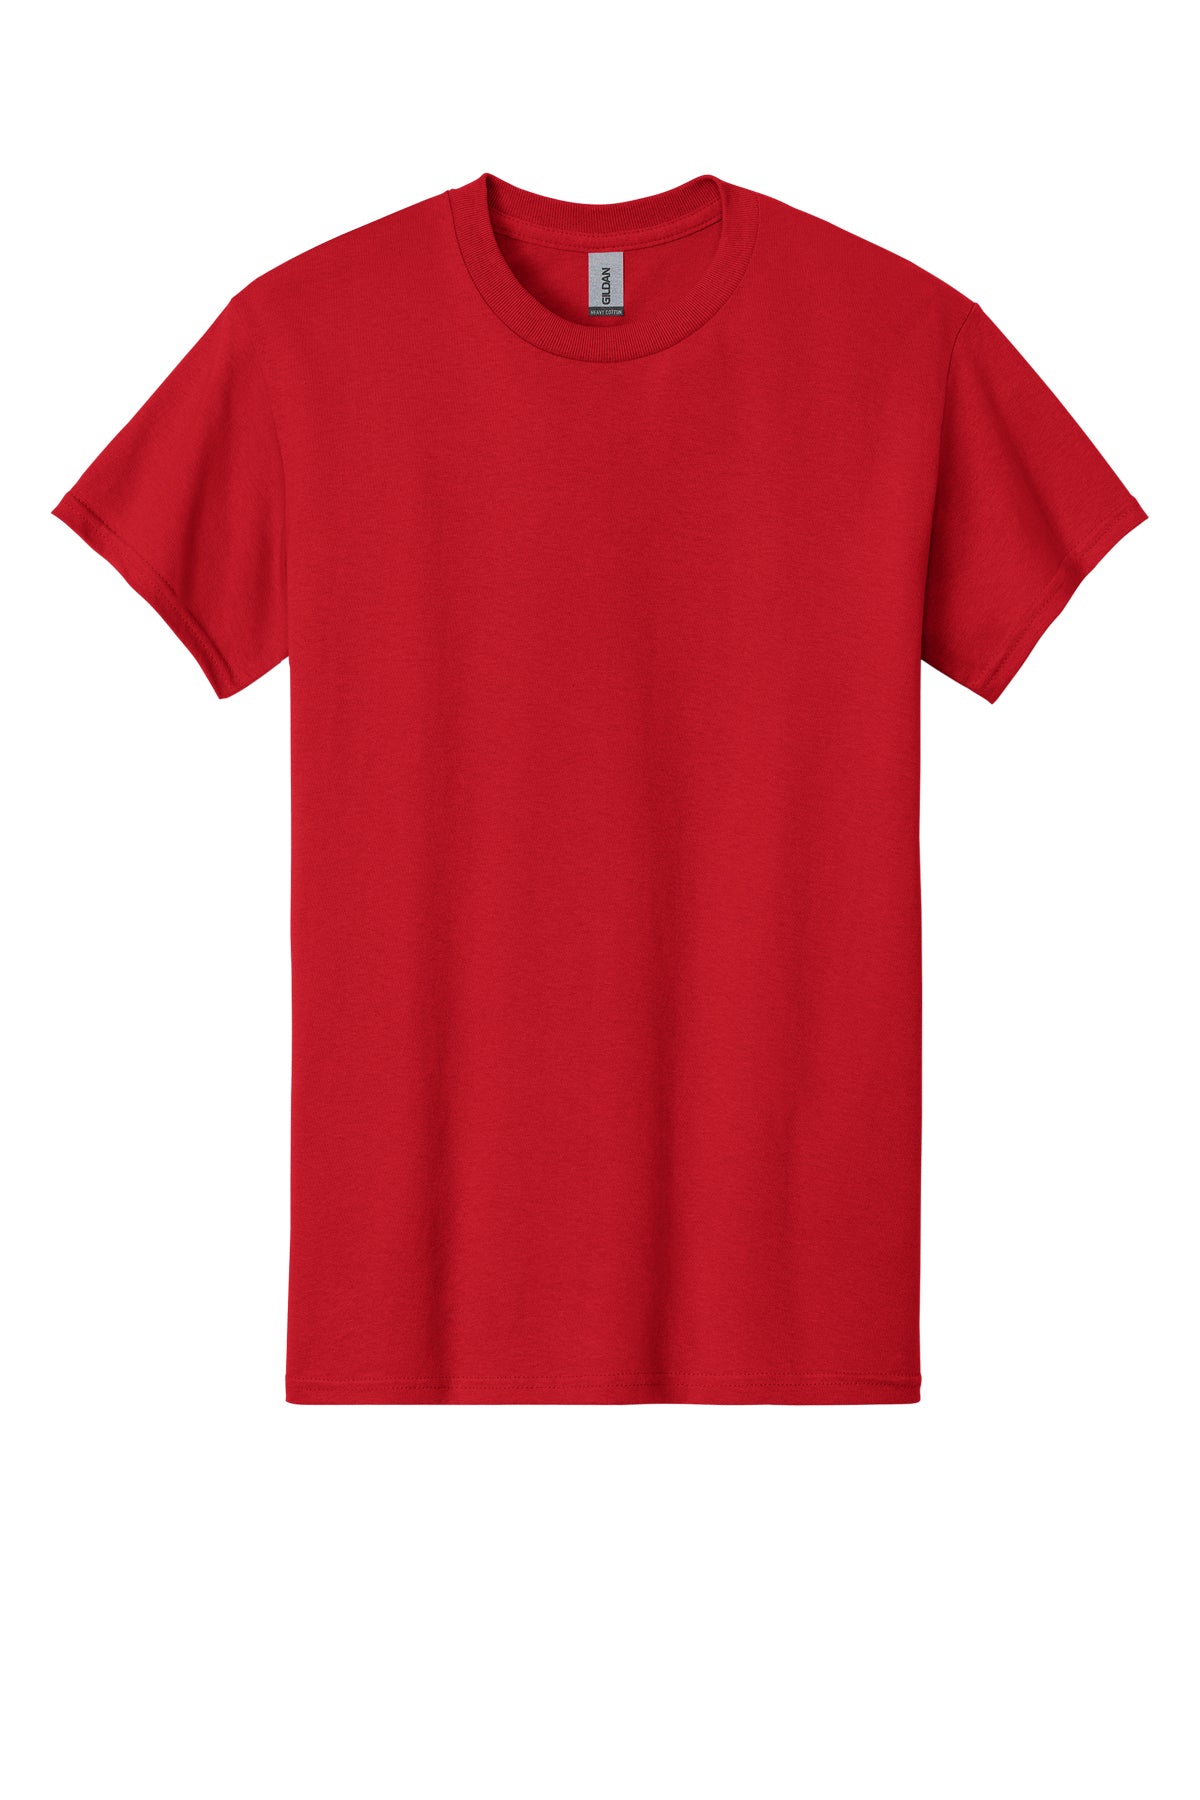 Gildan Mens/Unisex S/S Shirts Red